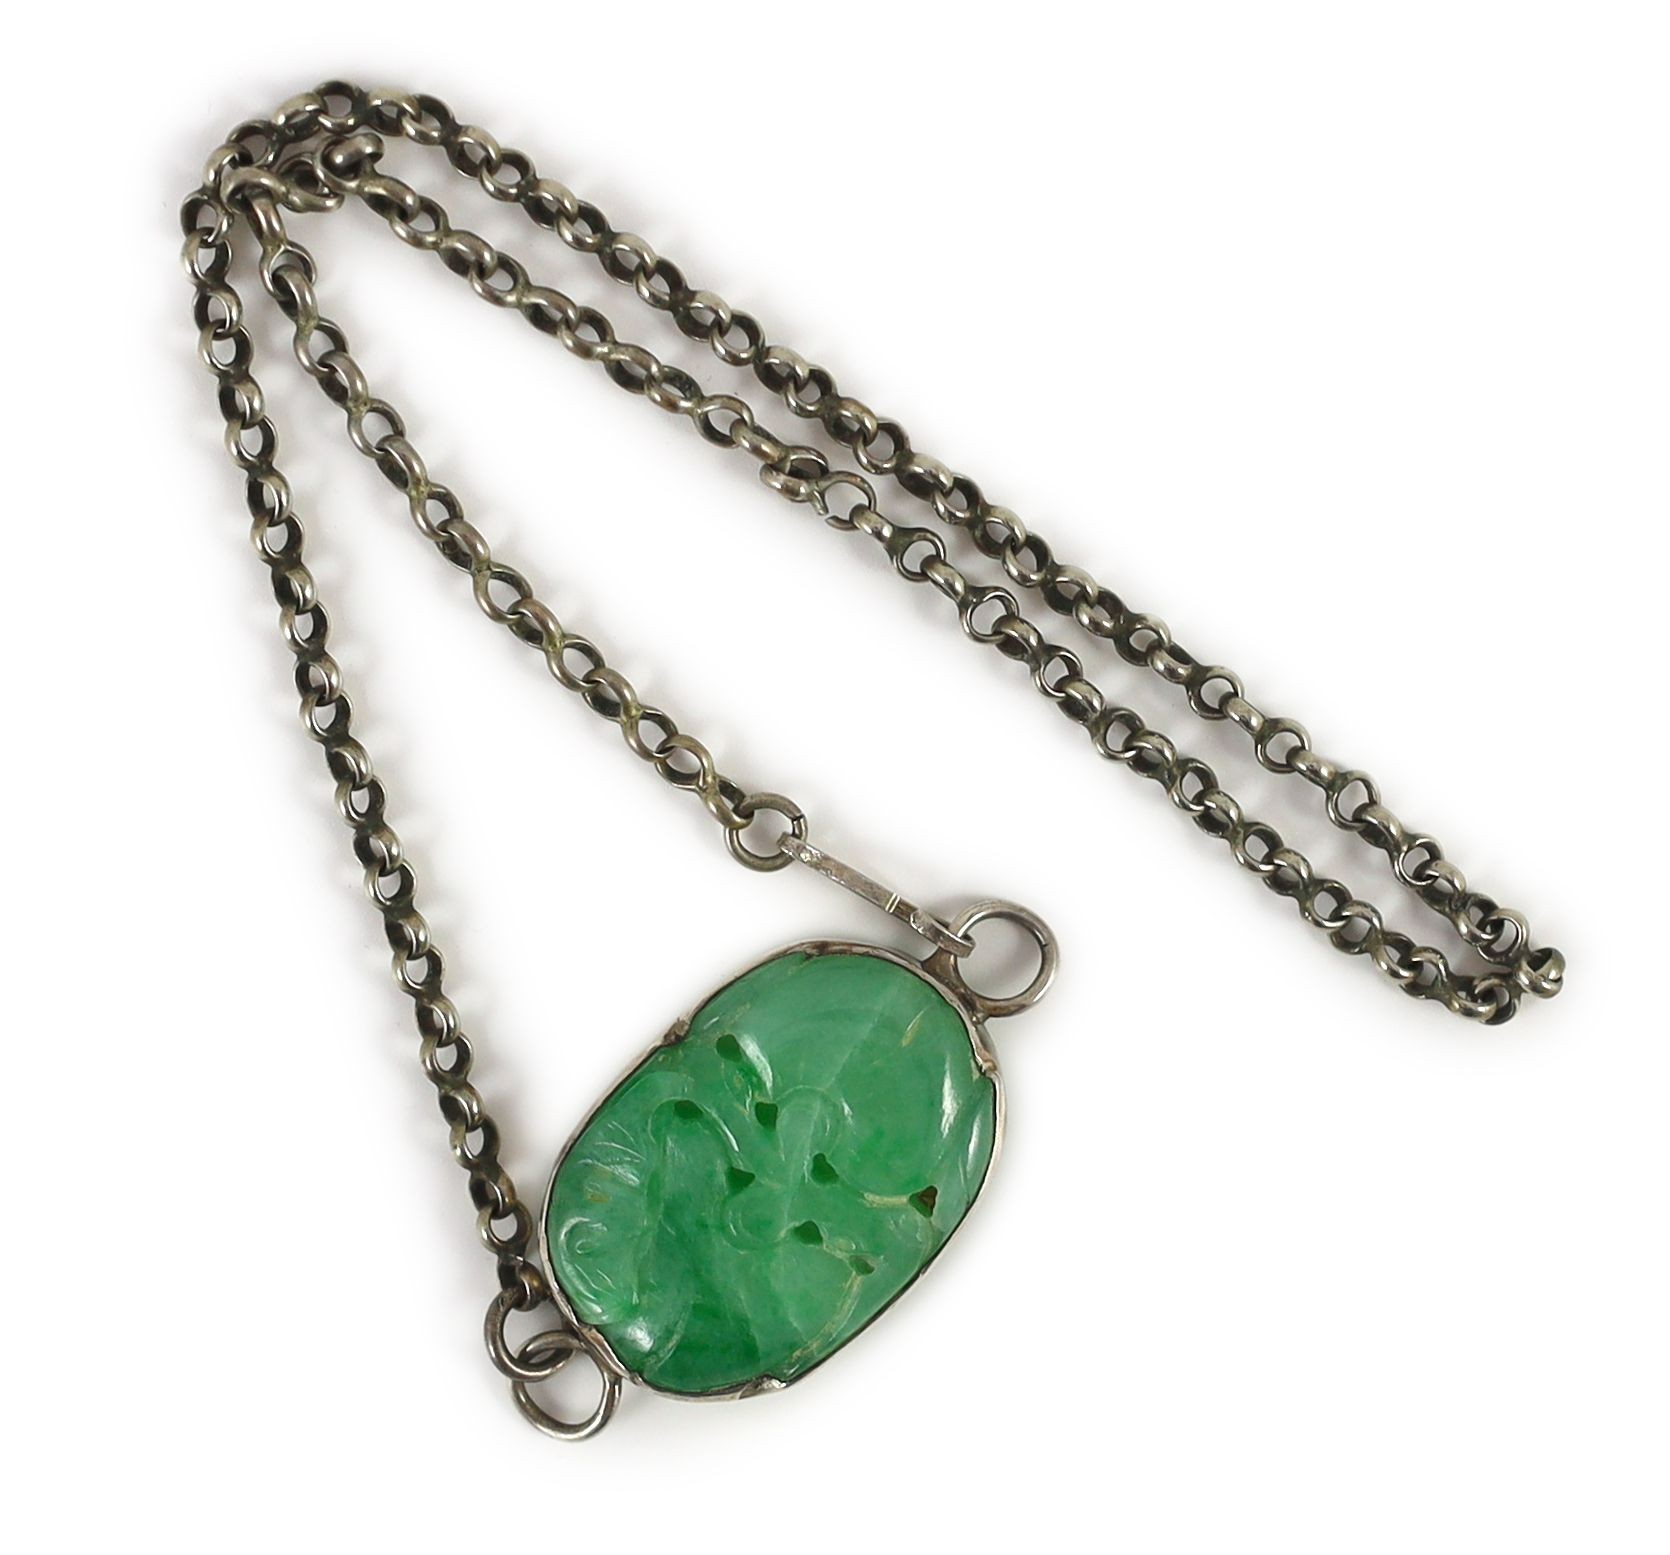 A Chinese jadeite pendant, Pendant 3.4 cm